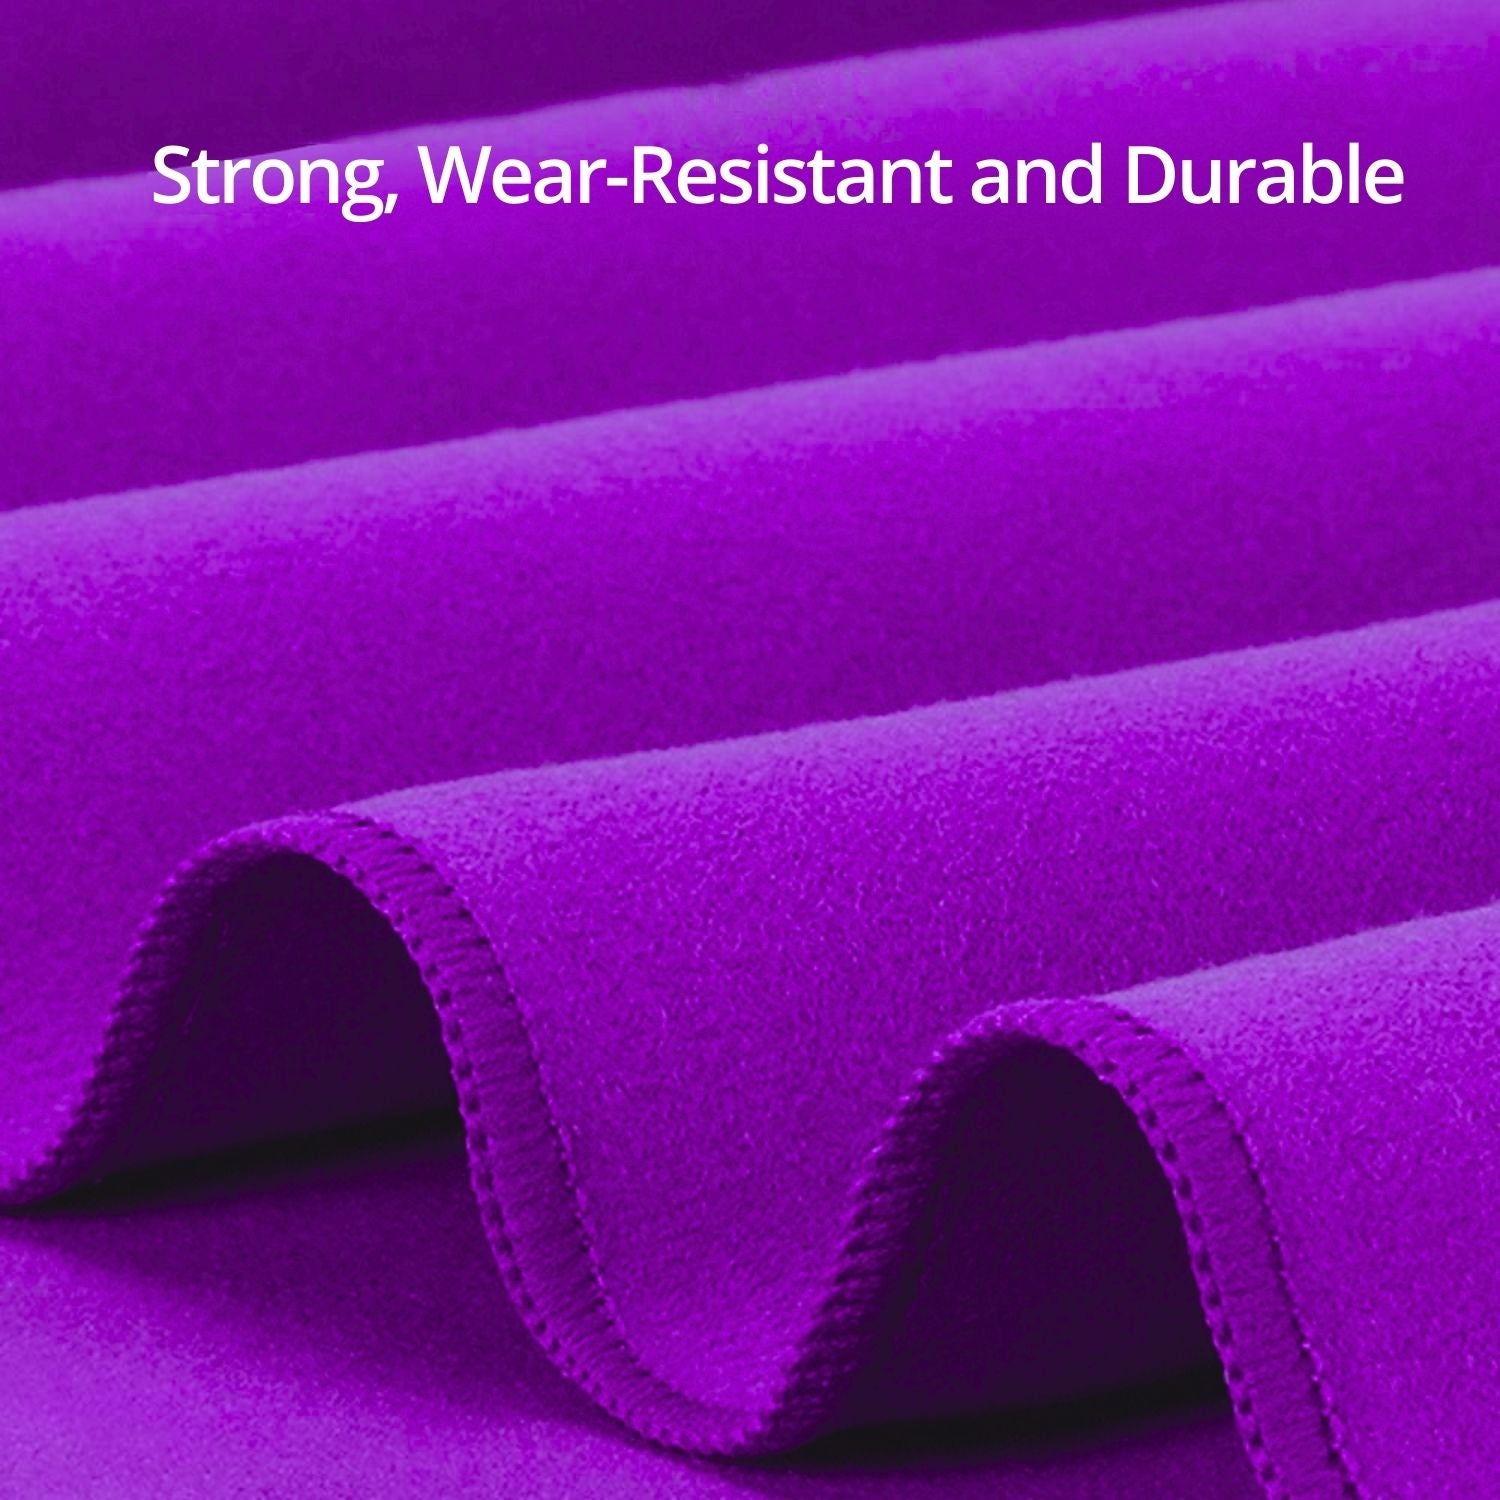 VERPEAK Quick Dry Gym Sport Towel 110*175CM (Purple)